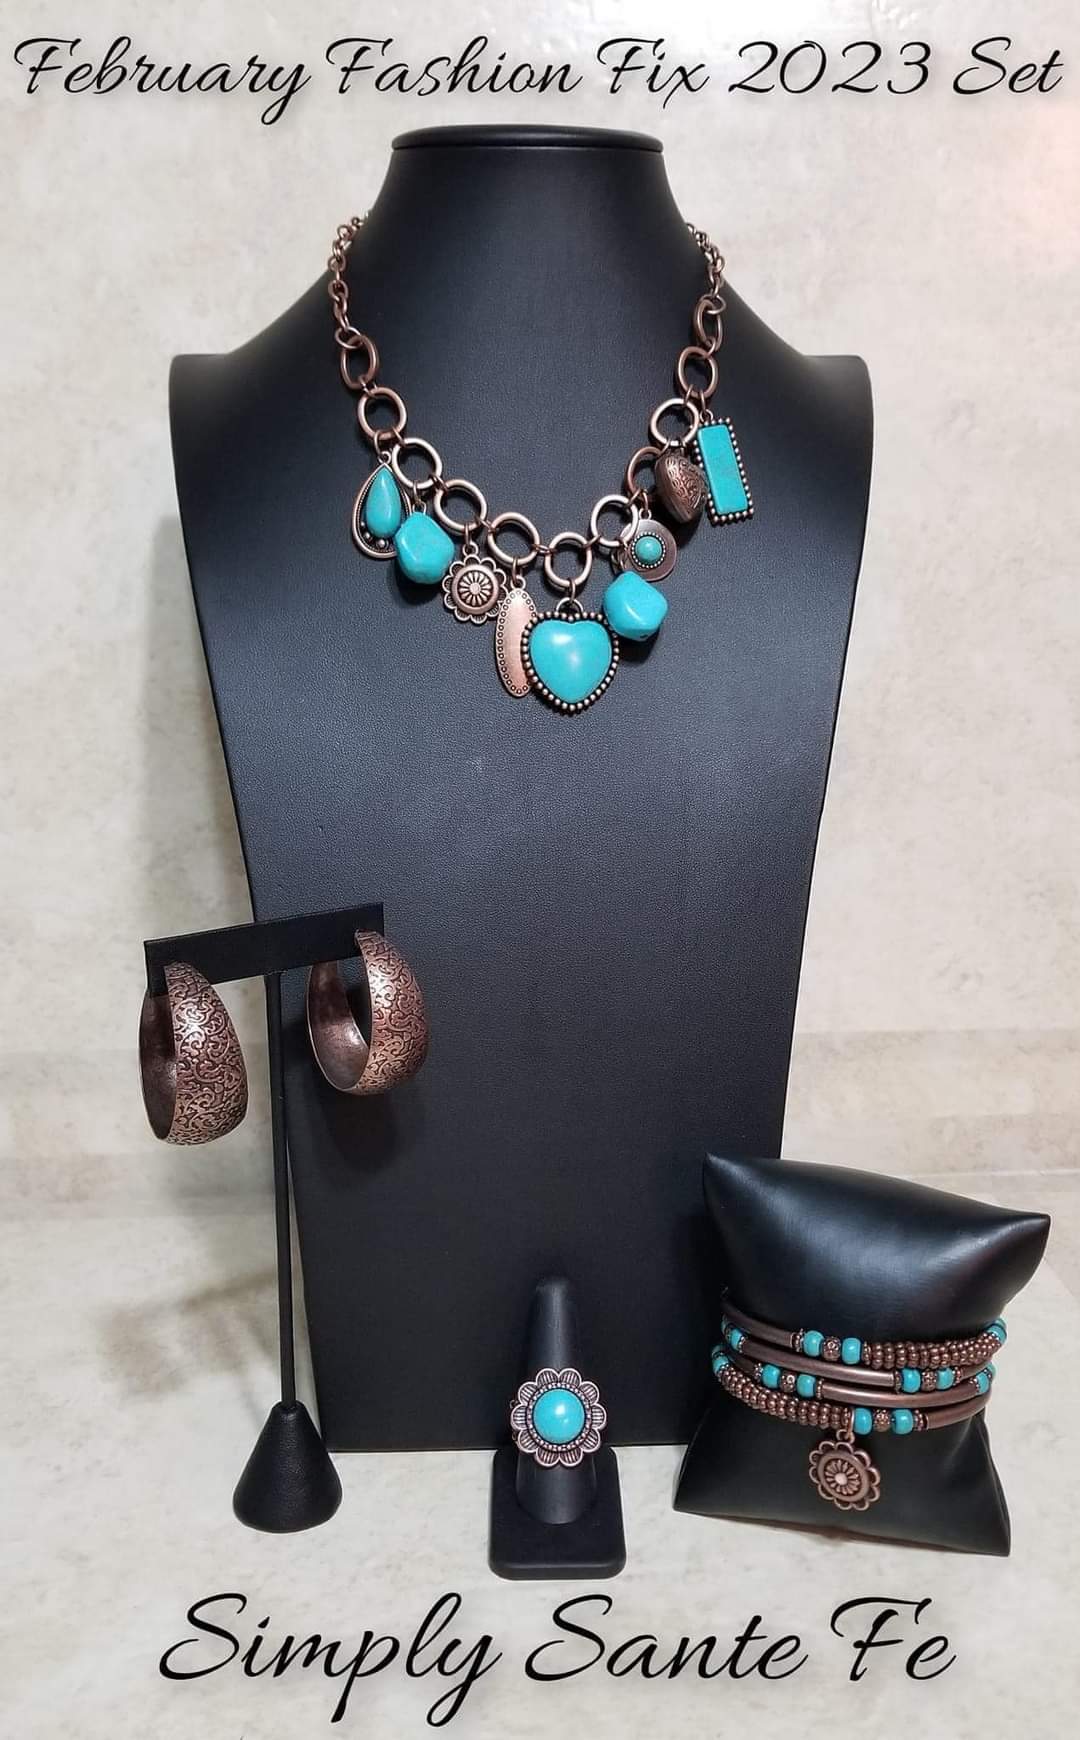 Simply Santa Fe - Blue Stone & Copper Complete Trend Blend February 2023 Fashion Fix Exclusive - Princess Glam Shop